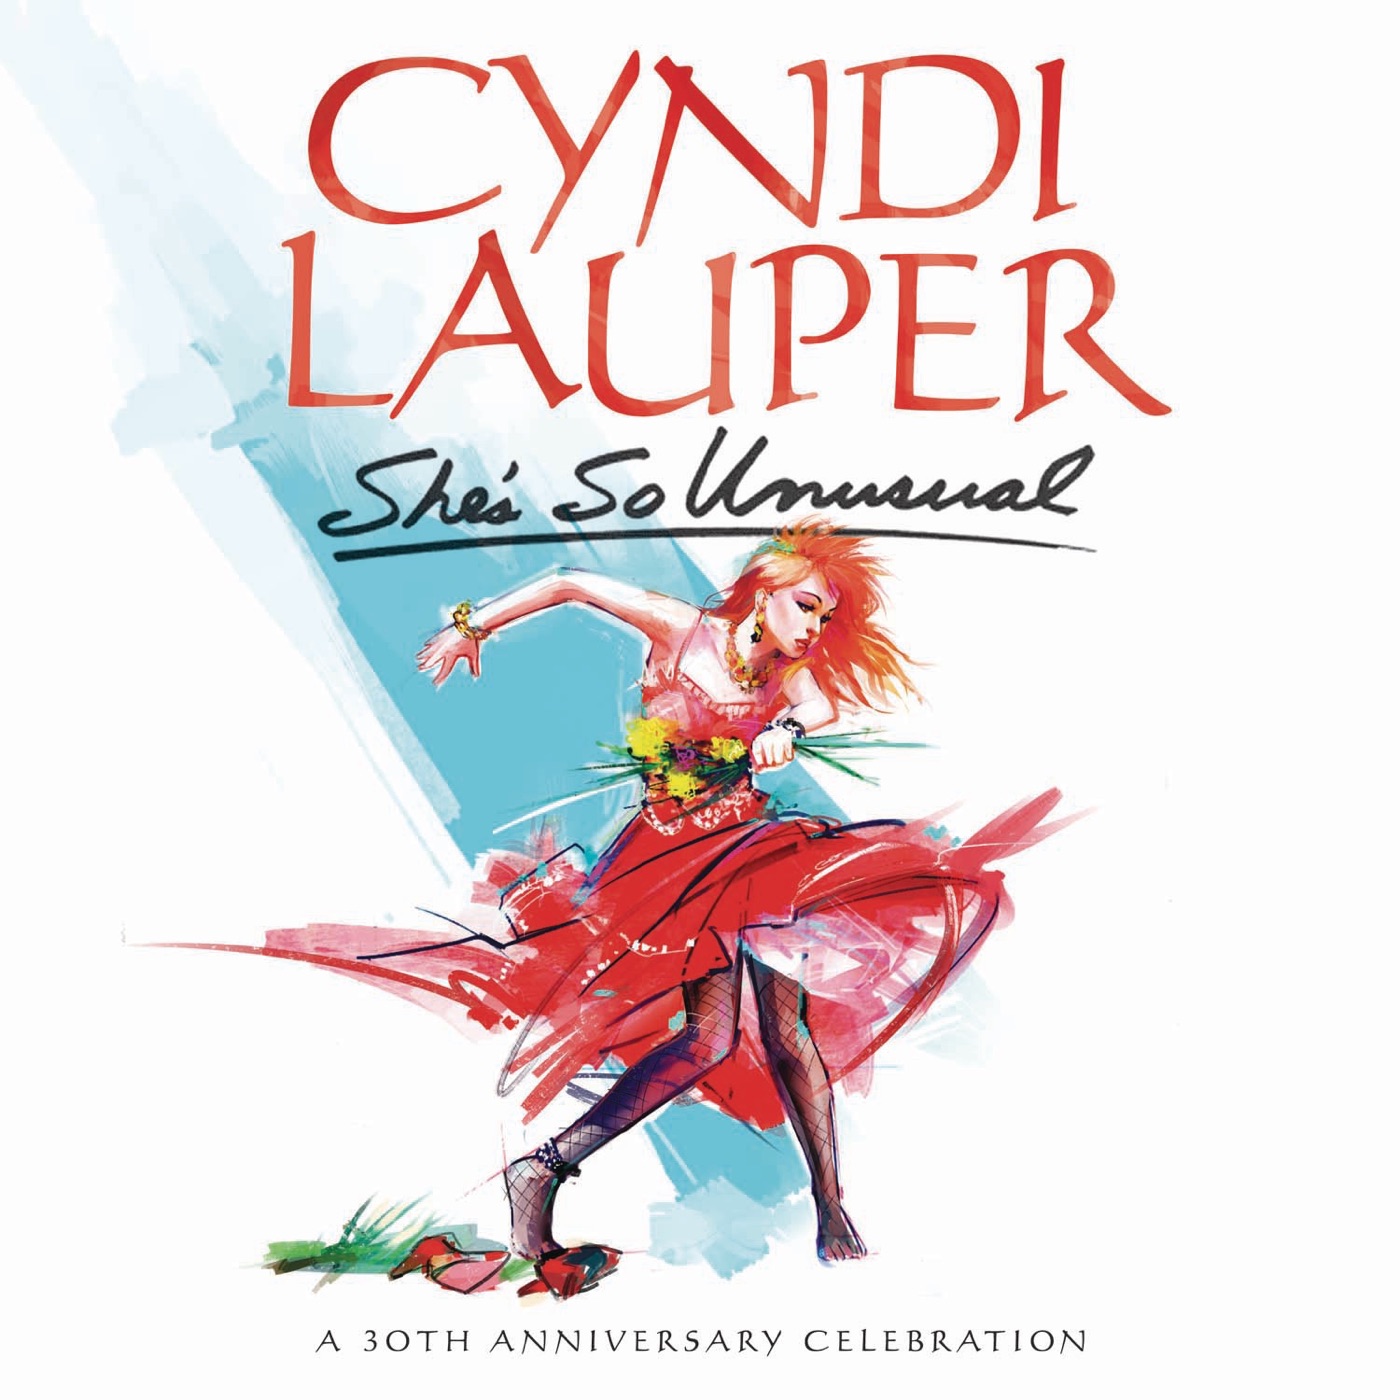 She's So Unusual: A 30th Anniversary Celebration by Cyndi Lauper